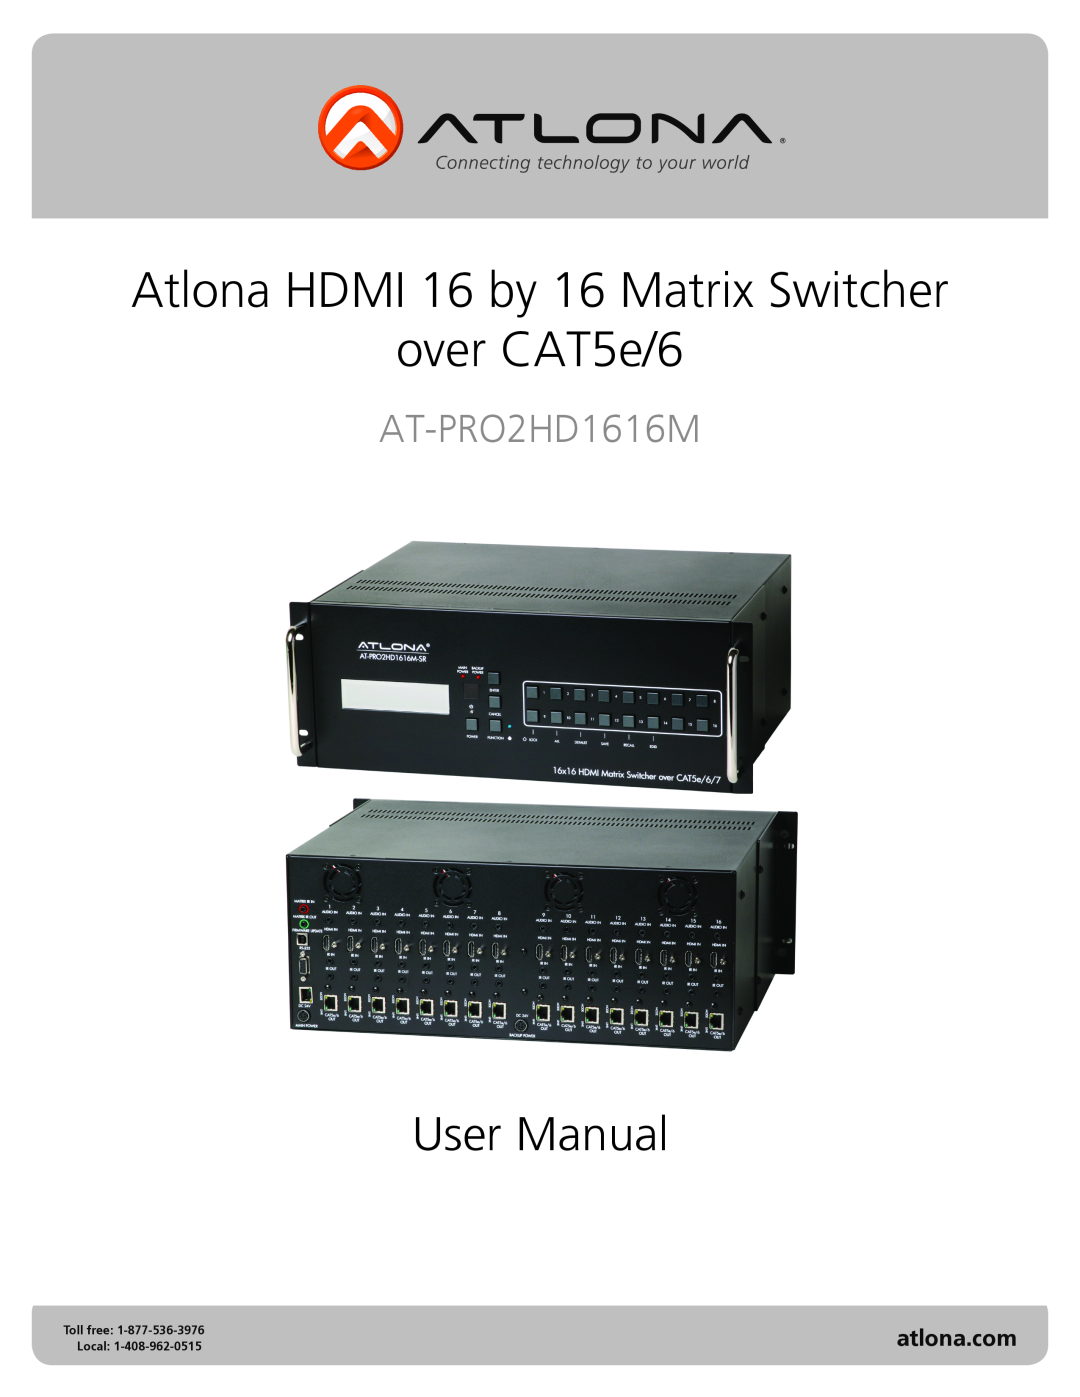 Atlona AT-PRO2HD1616M user manual atlona.com, Atlona HDMI 16 by 16 Matrix Switcher over CAT5e/6, Toll free, Local 